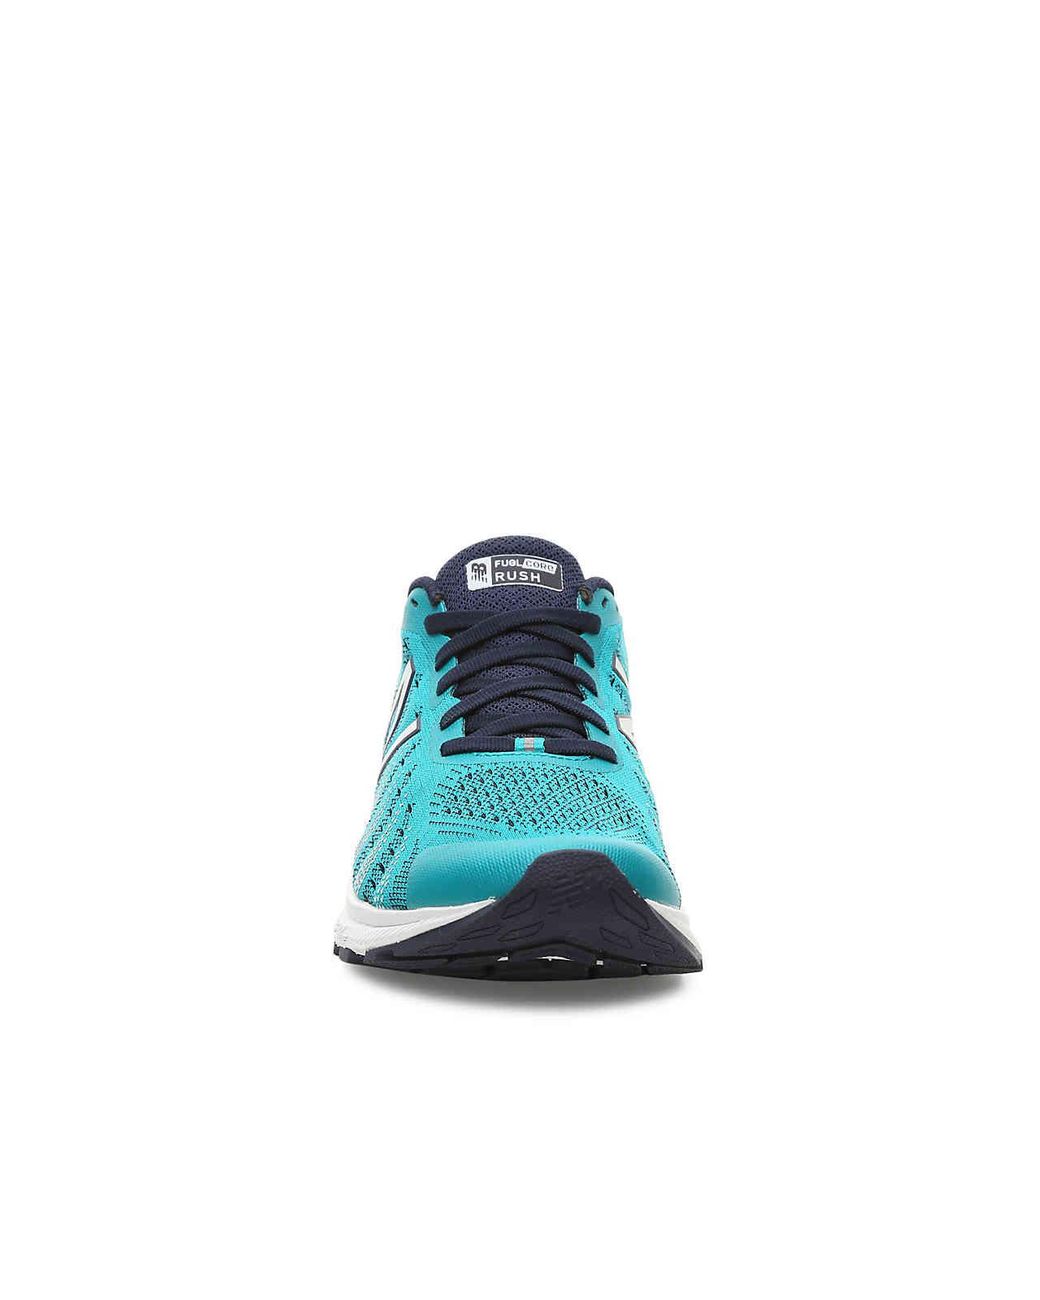 New Balance Fuelcore Rush V3 Lightweight Running Shoe in Blue | Lyst